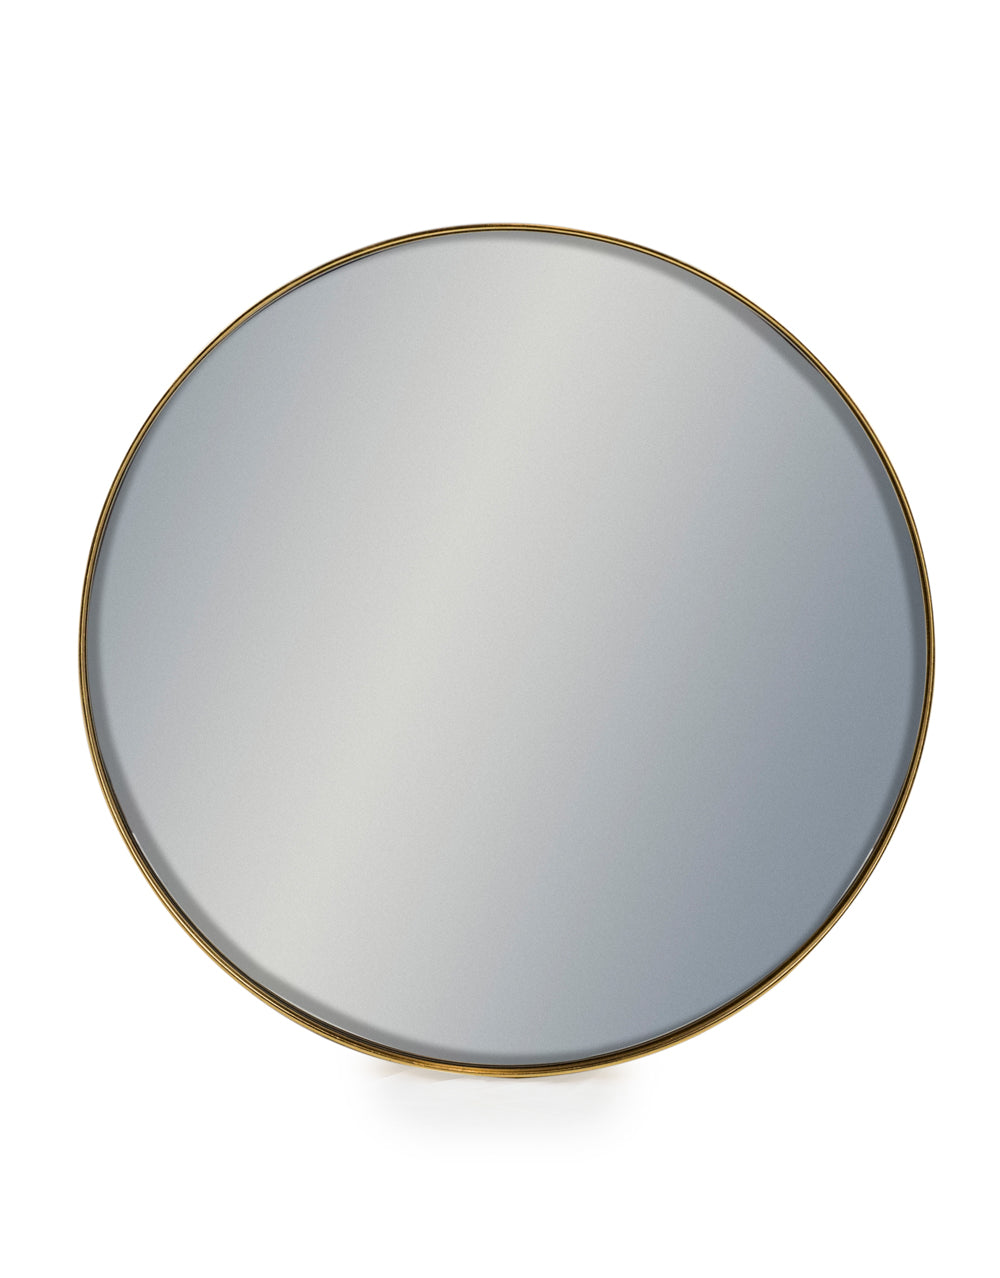 Round Gold Framed Wall Mirror